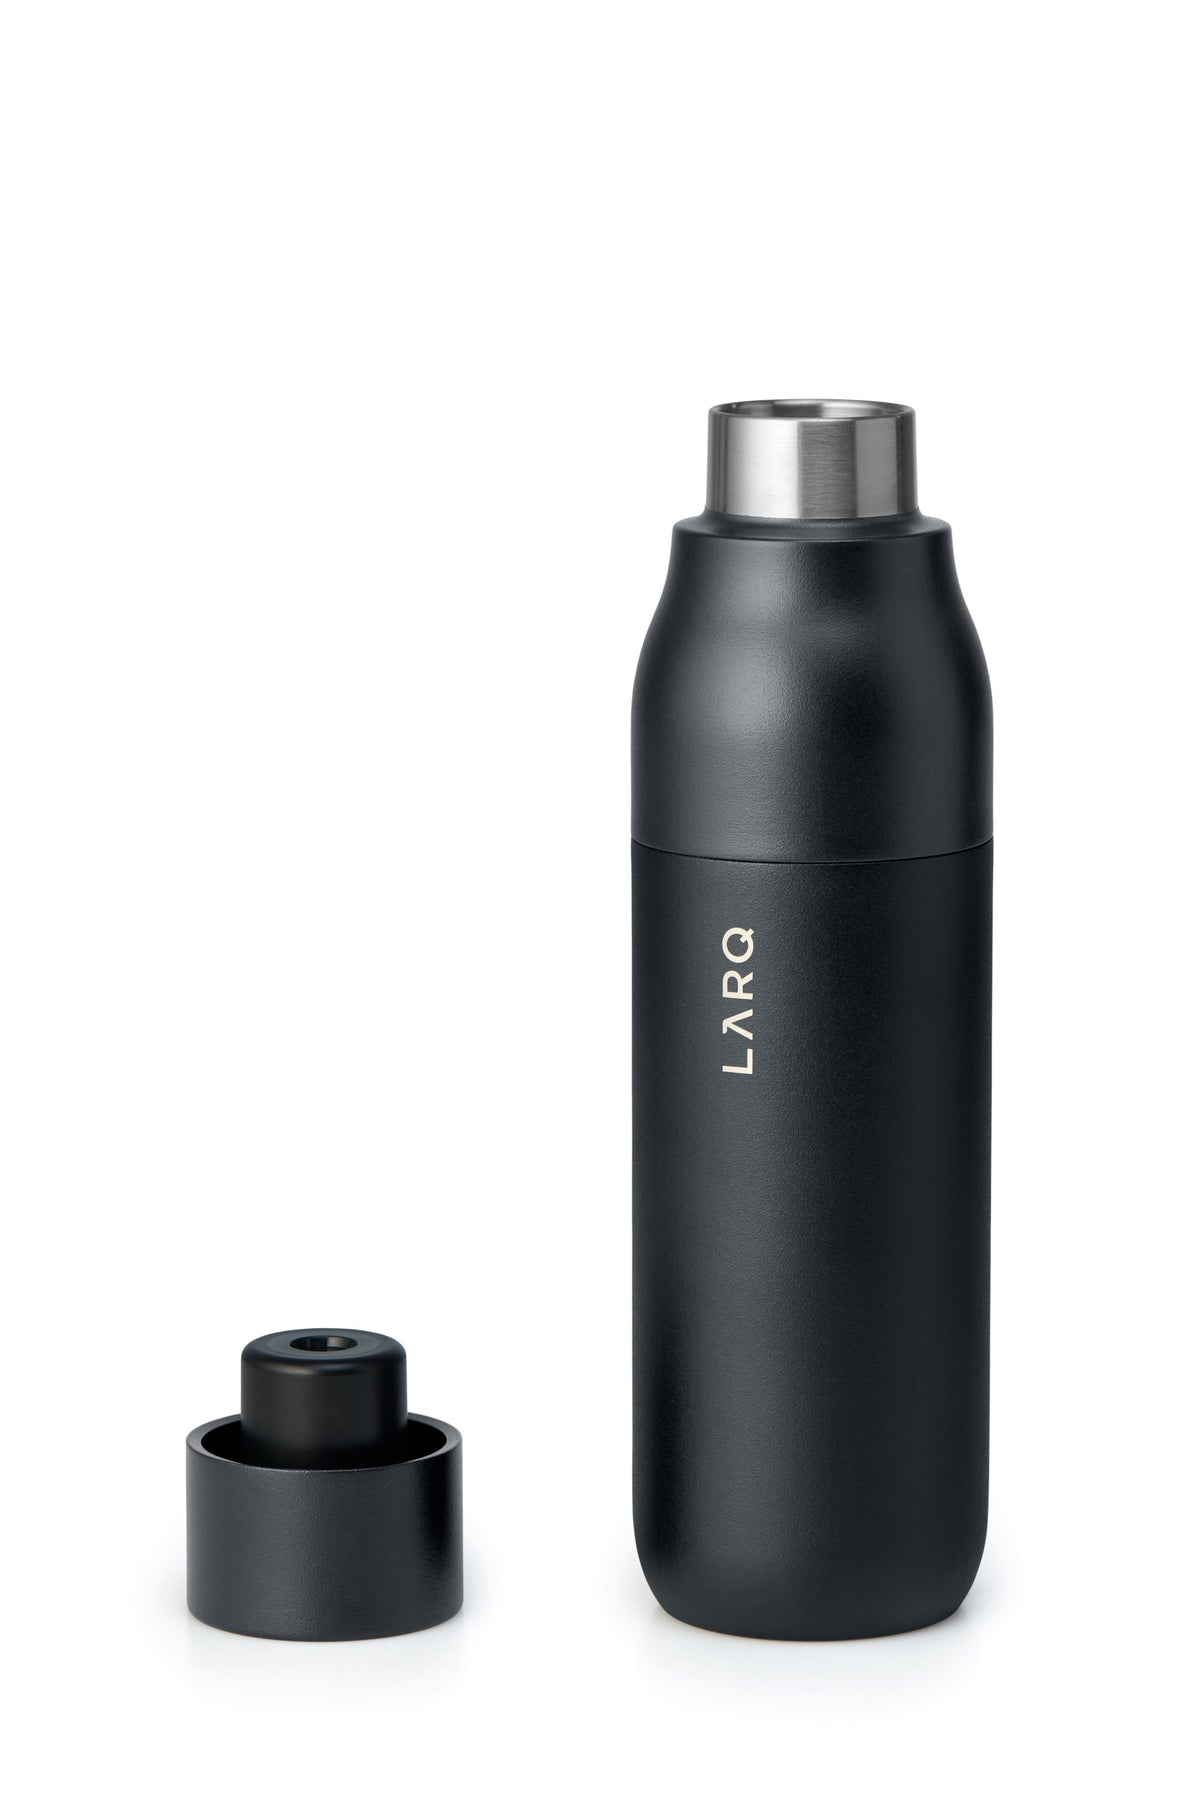 Larq PureVis Insulated Bottle - 17 Oz